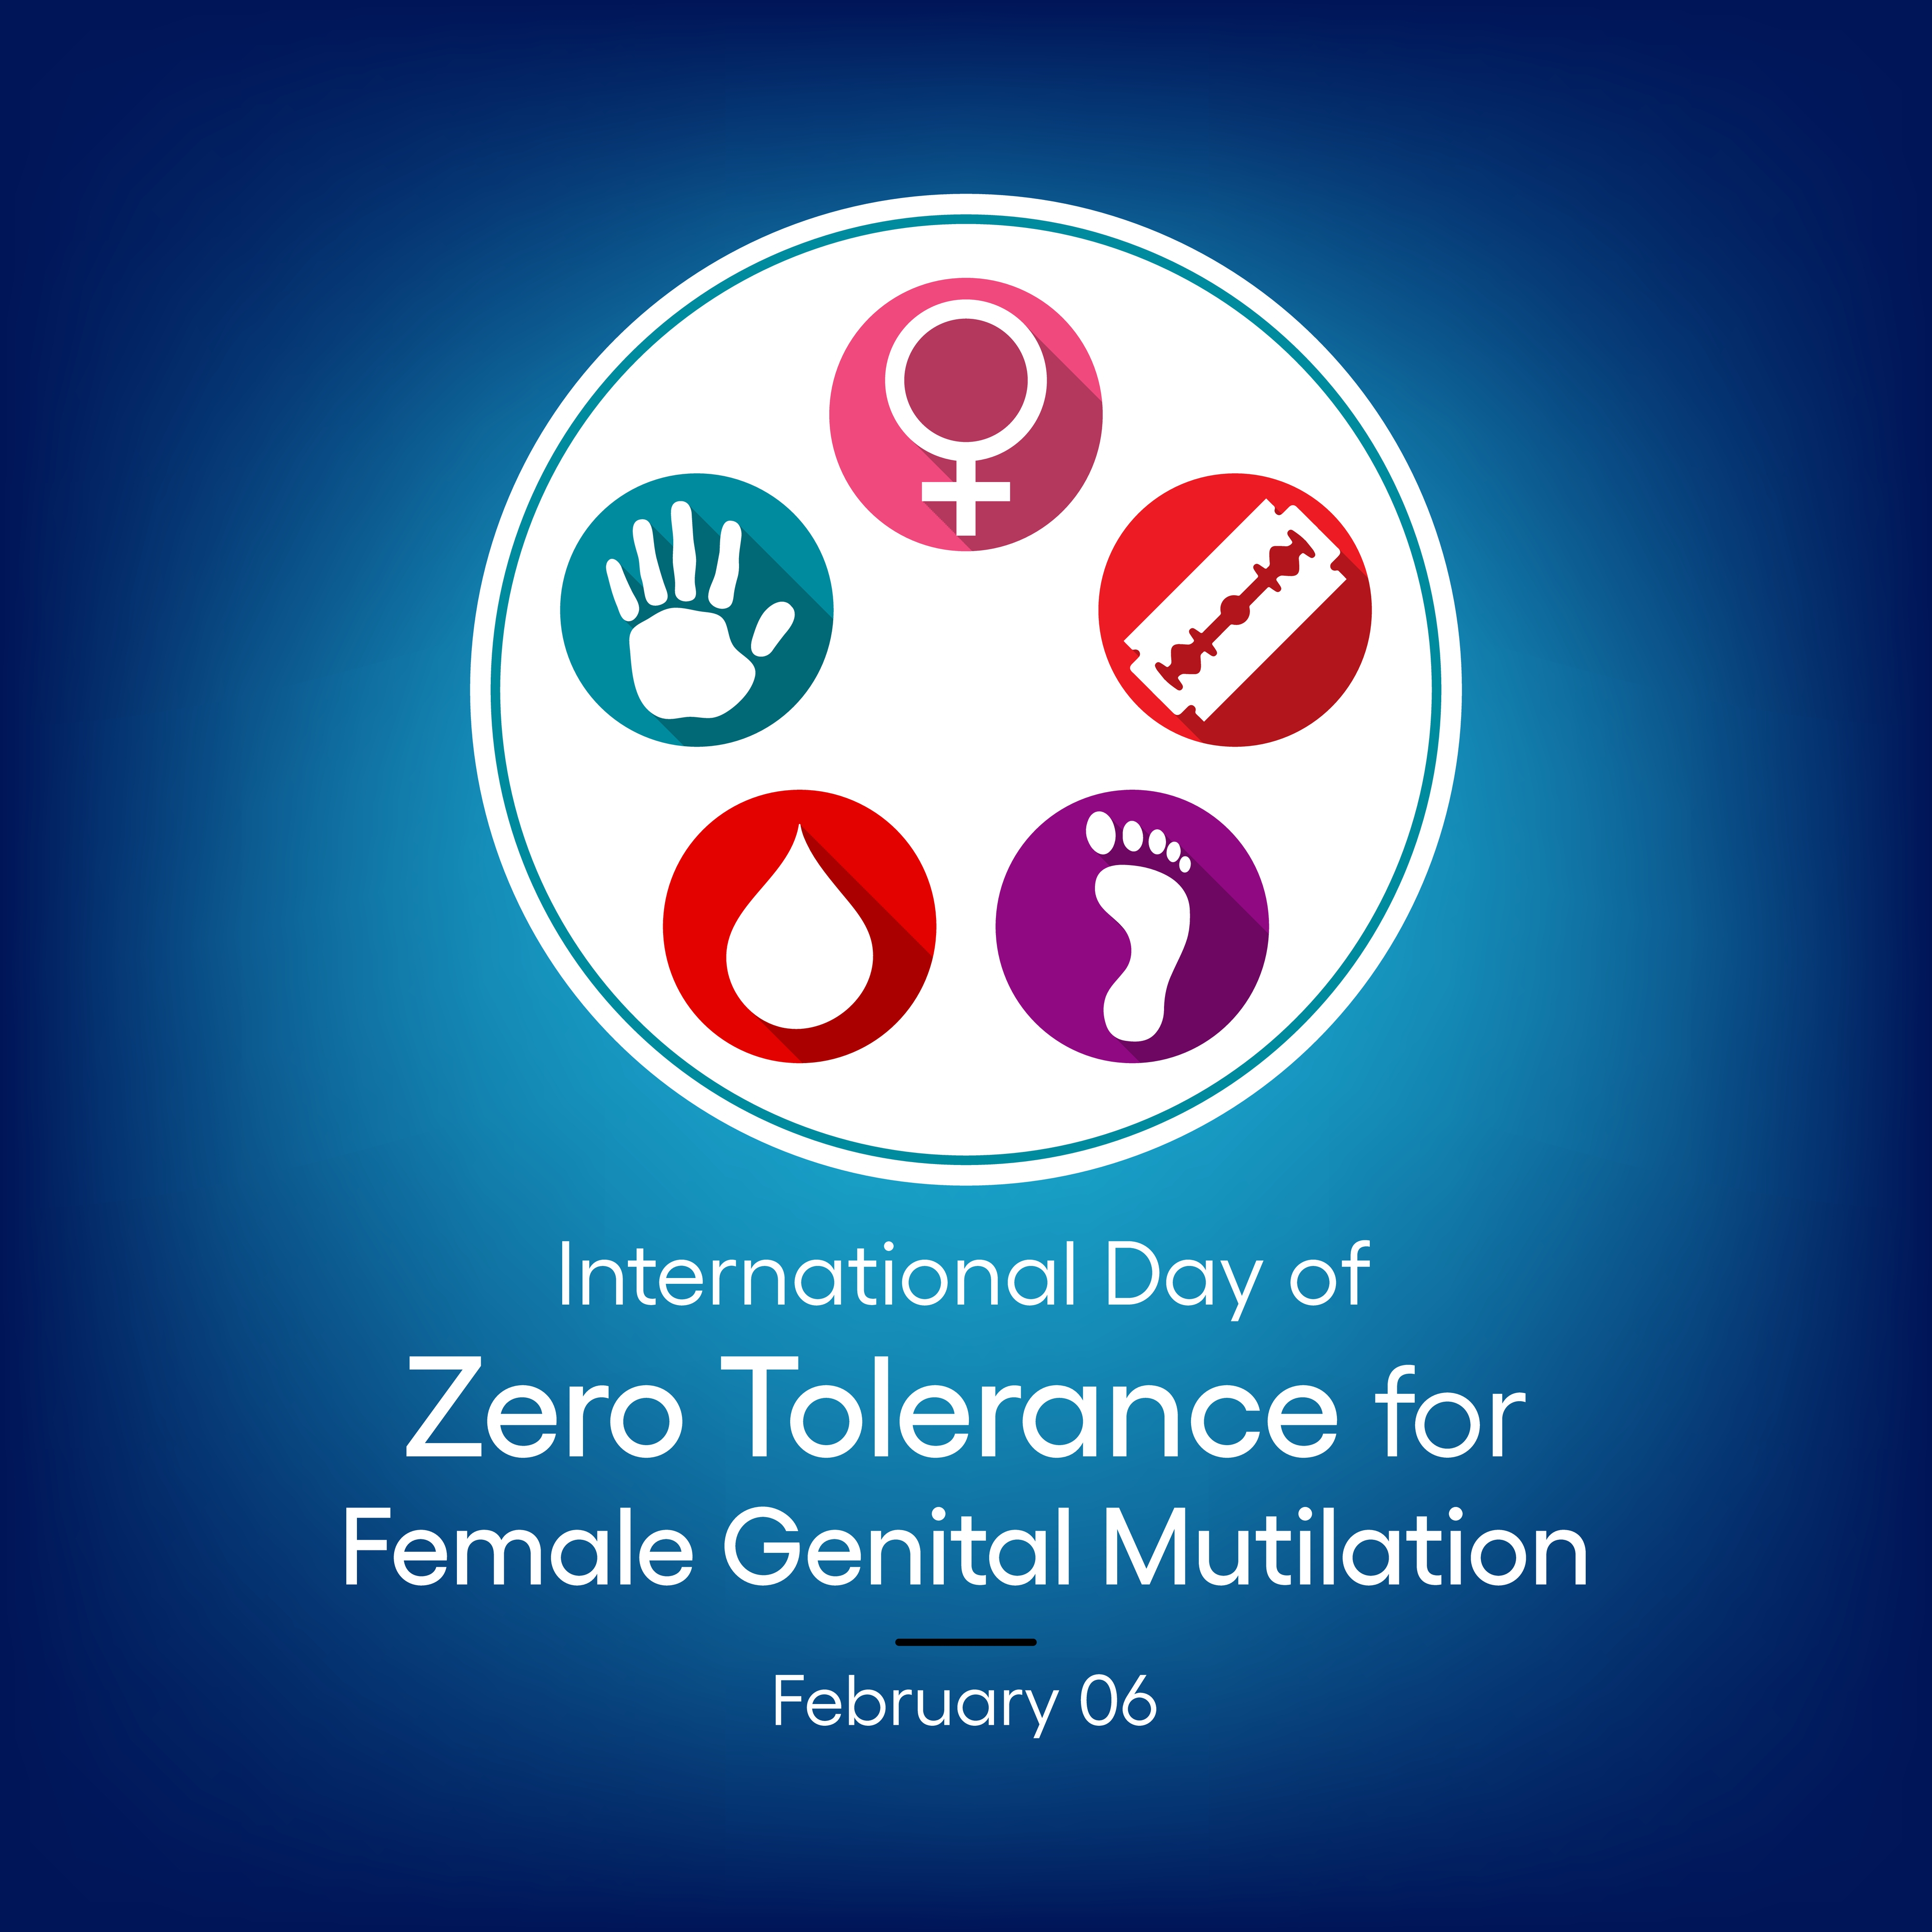 The International Day of Zero Tolerance for Female Genital